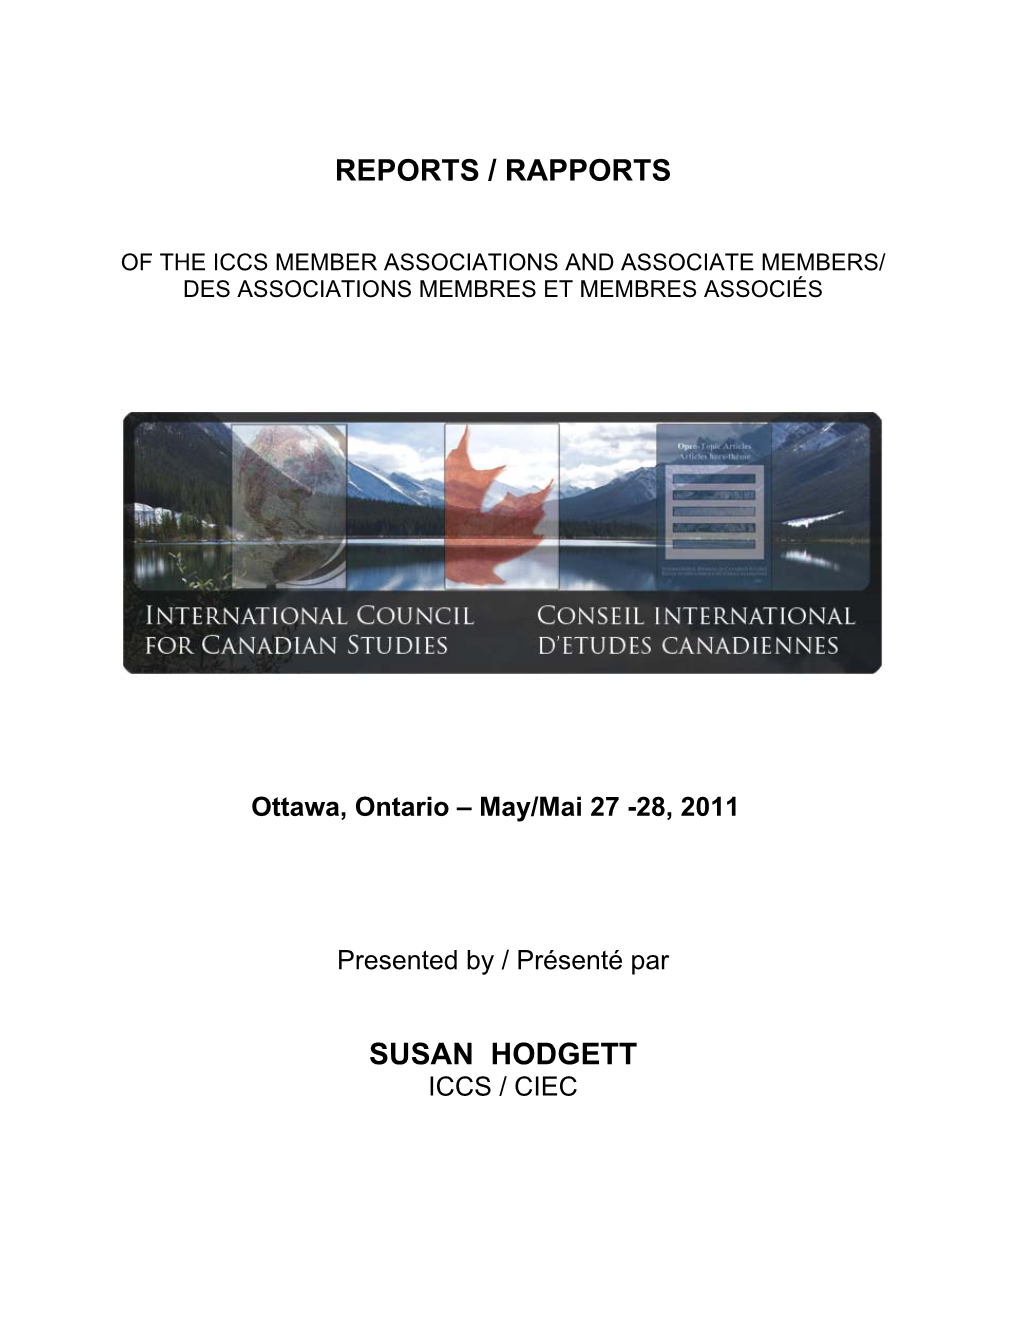 Reports / Rapports Susan Hodgett